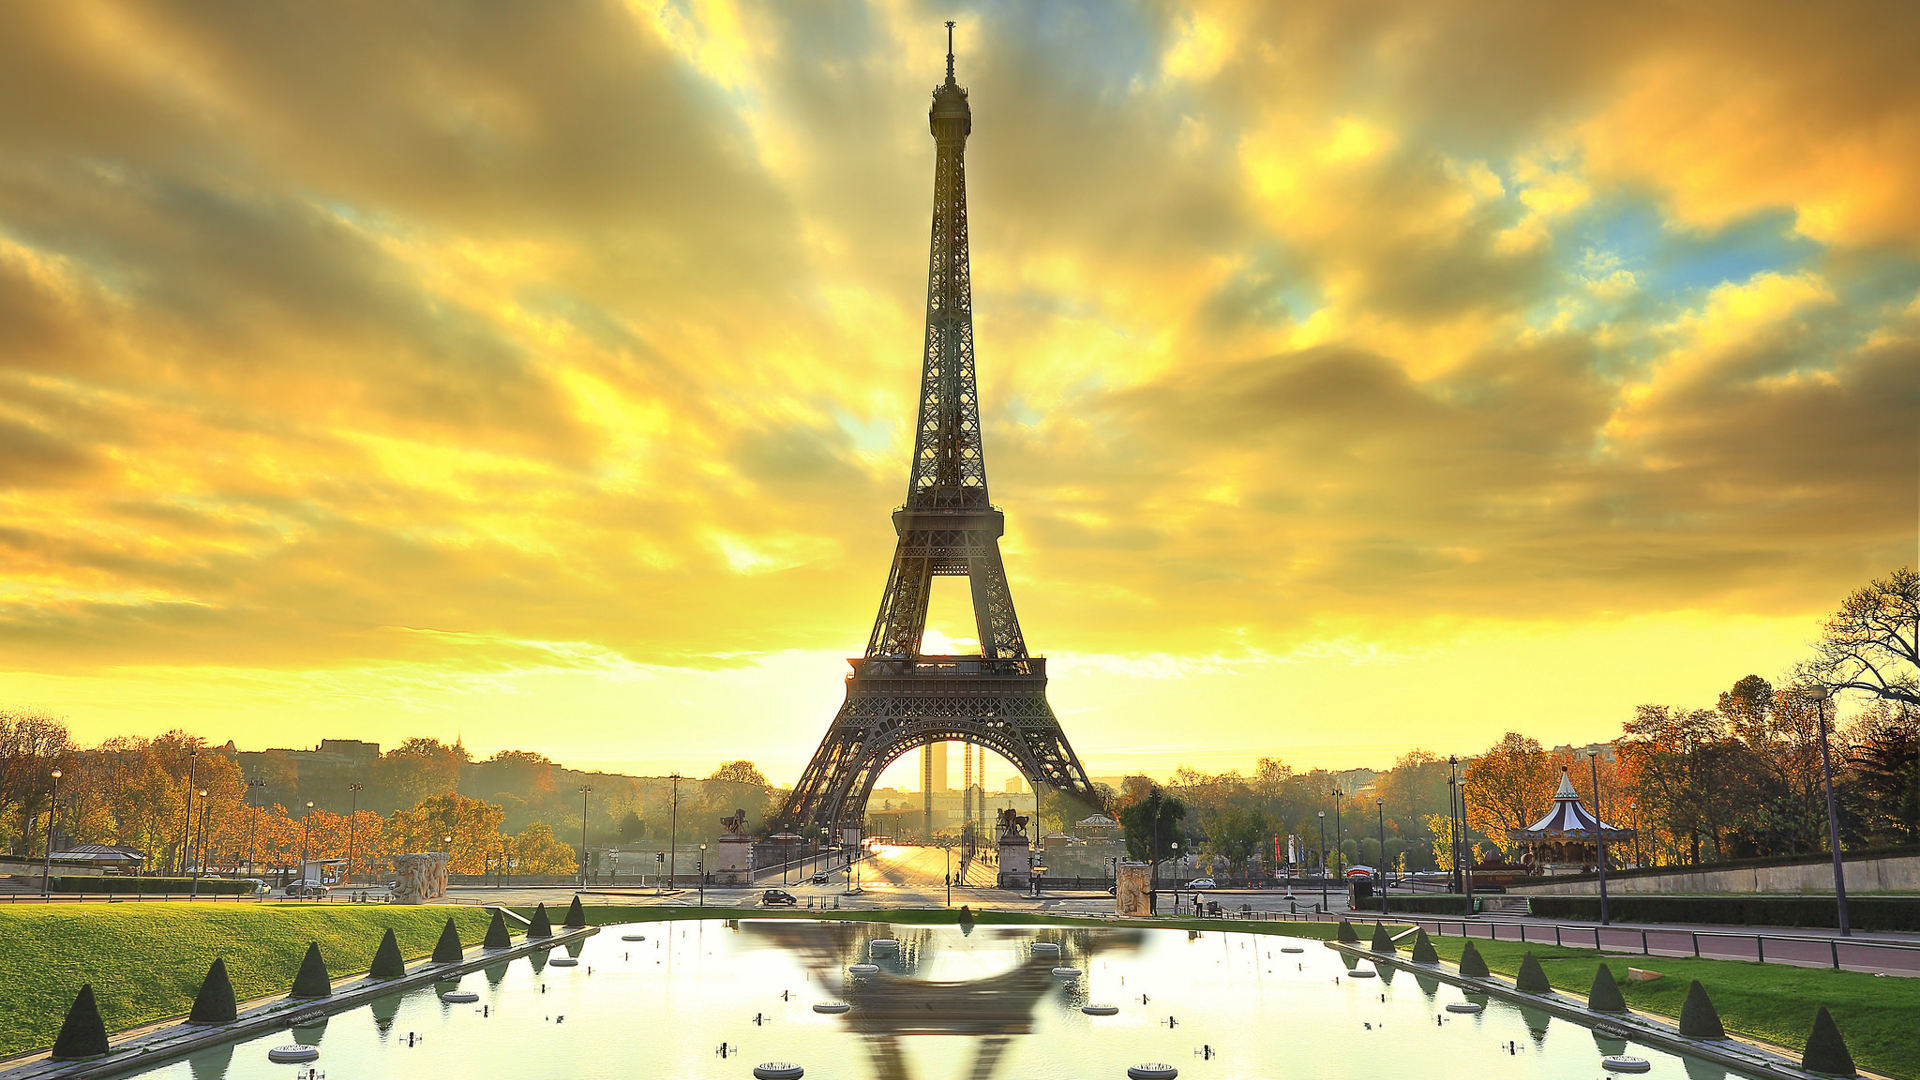 Eiffel Tower Paris With Cloudy Sky Wallpaper 2K Travel